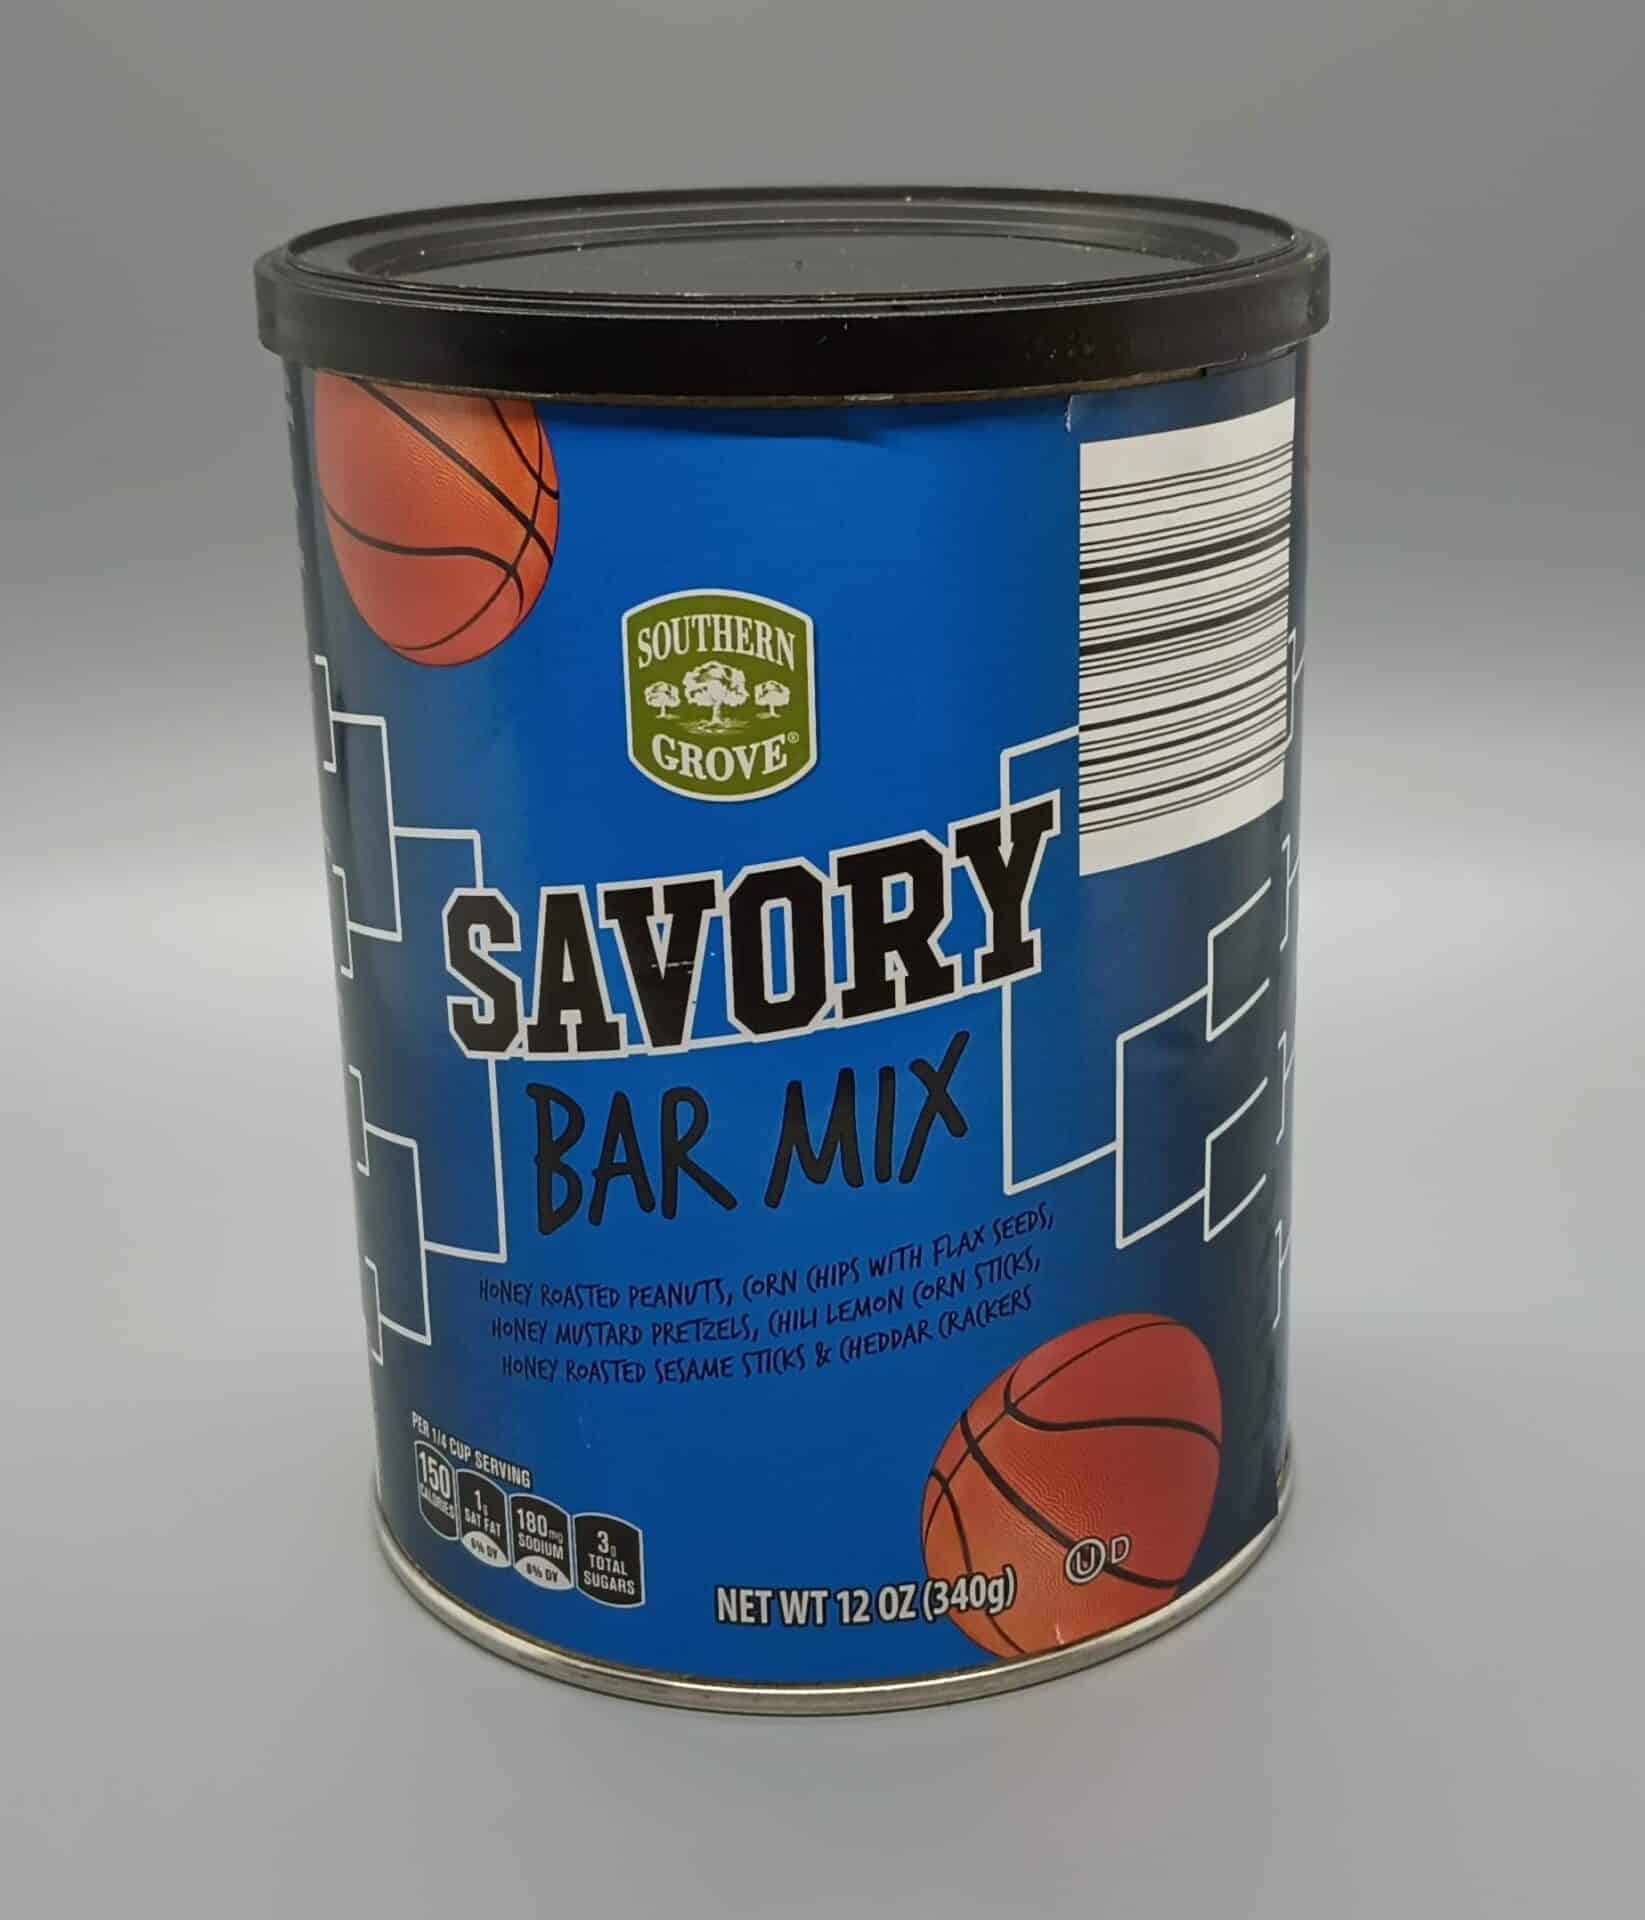 Southern Grove Savory Bar Mix